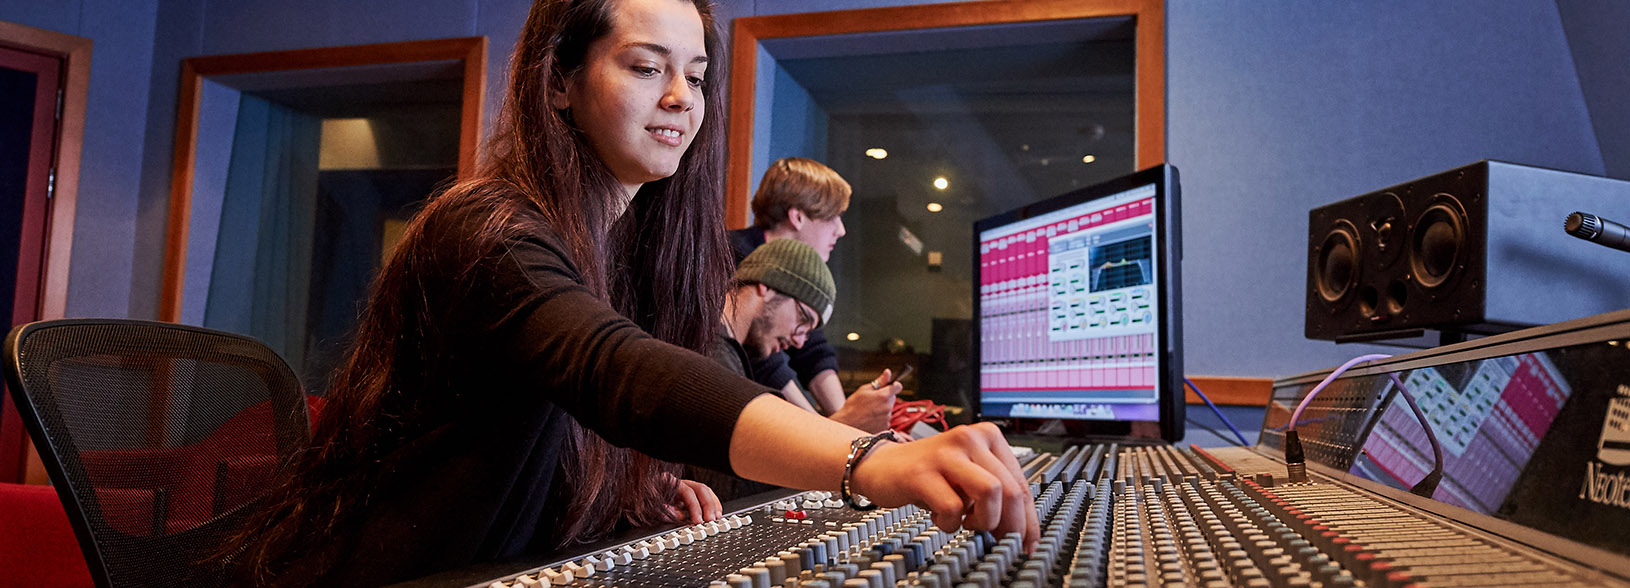 Audio engineering students at sound desk in studio